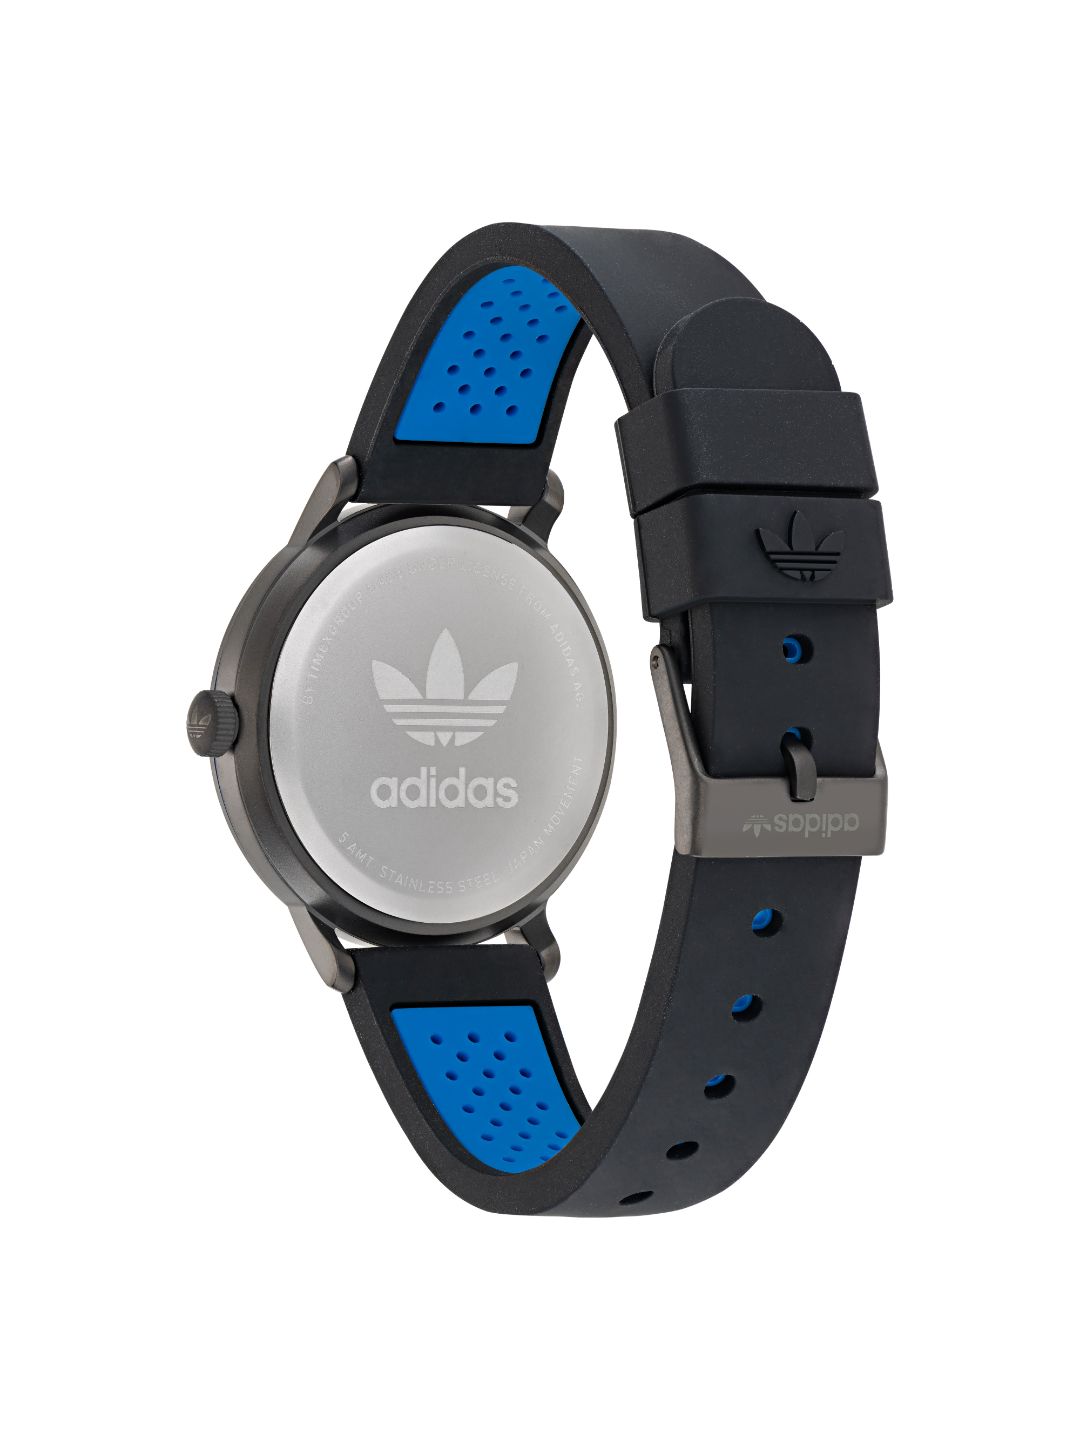 Adidas Originals Black Dial Unisex Watch - AOSY22020